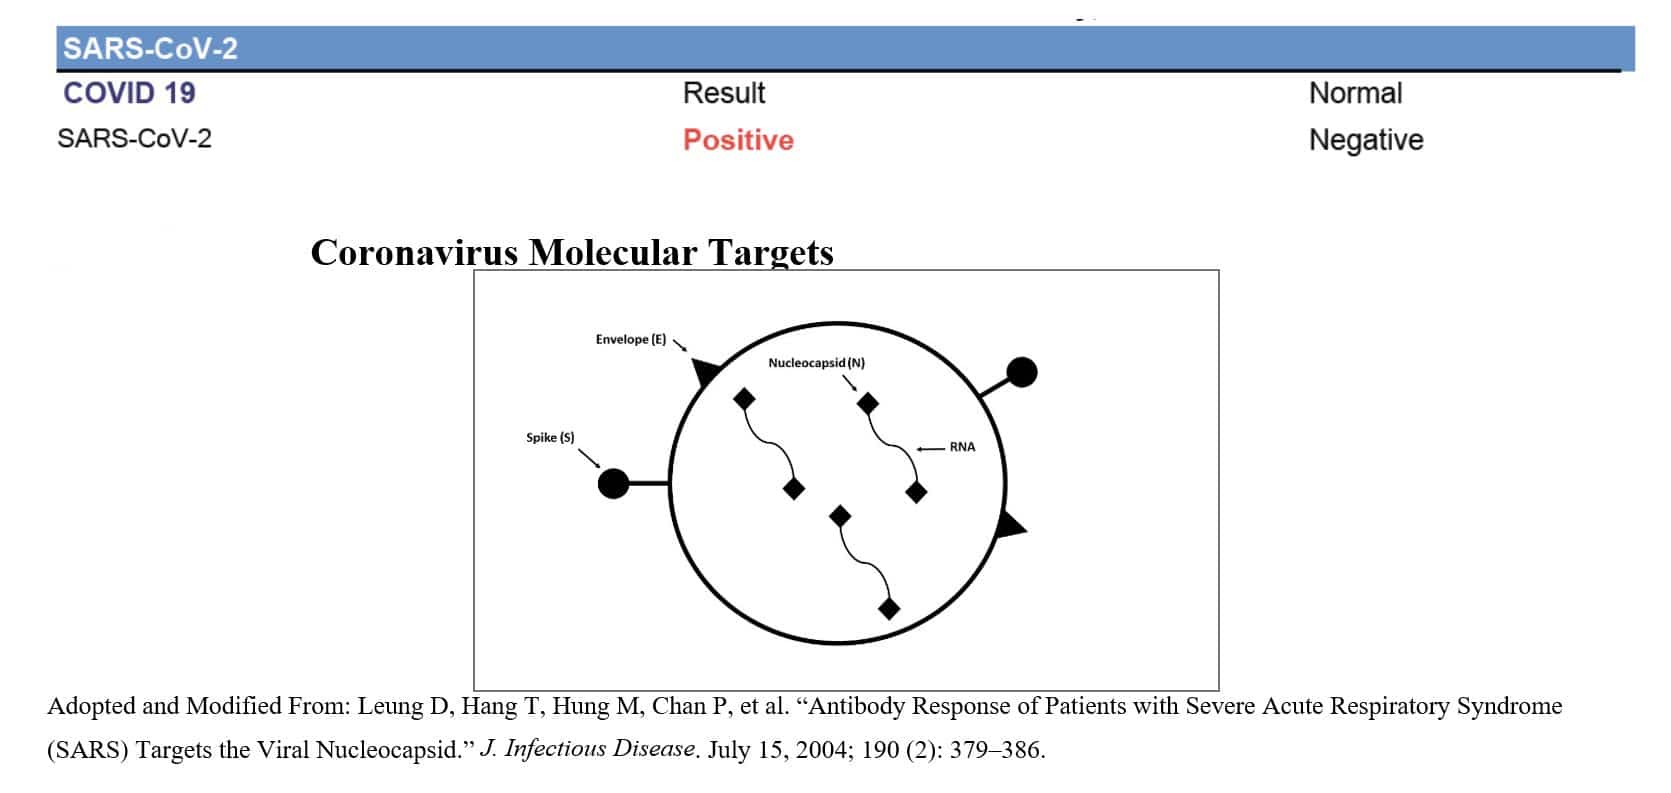 Figure showing Coronavirus Molecular Targets